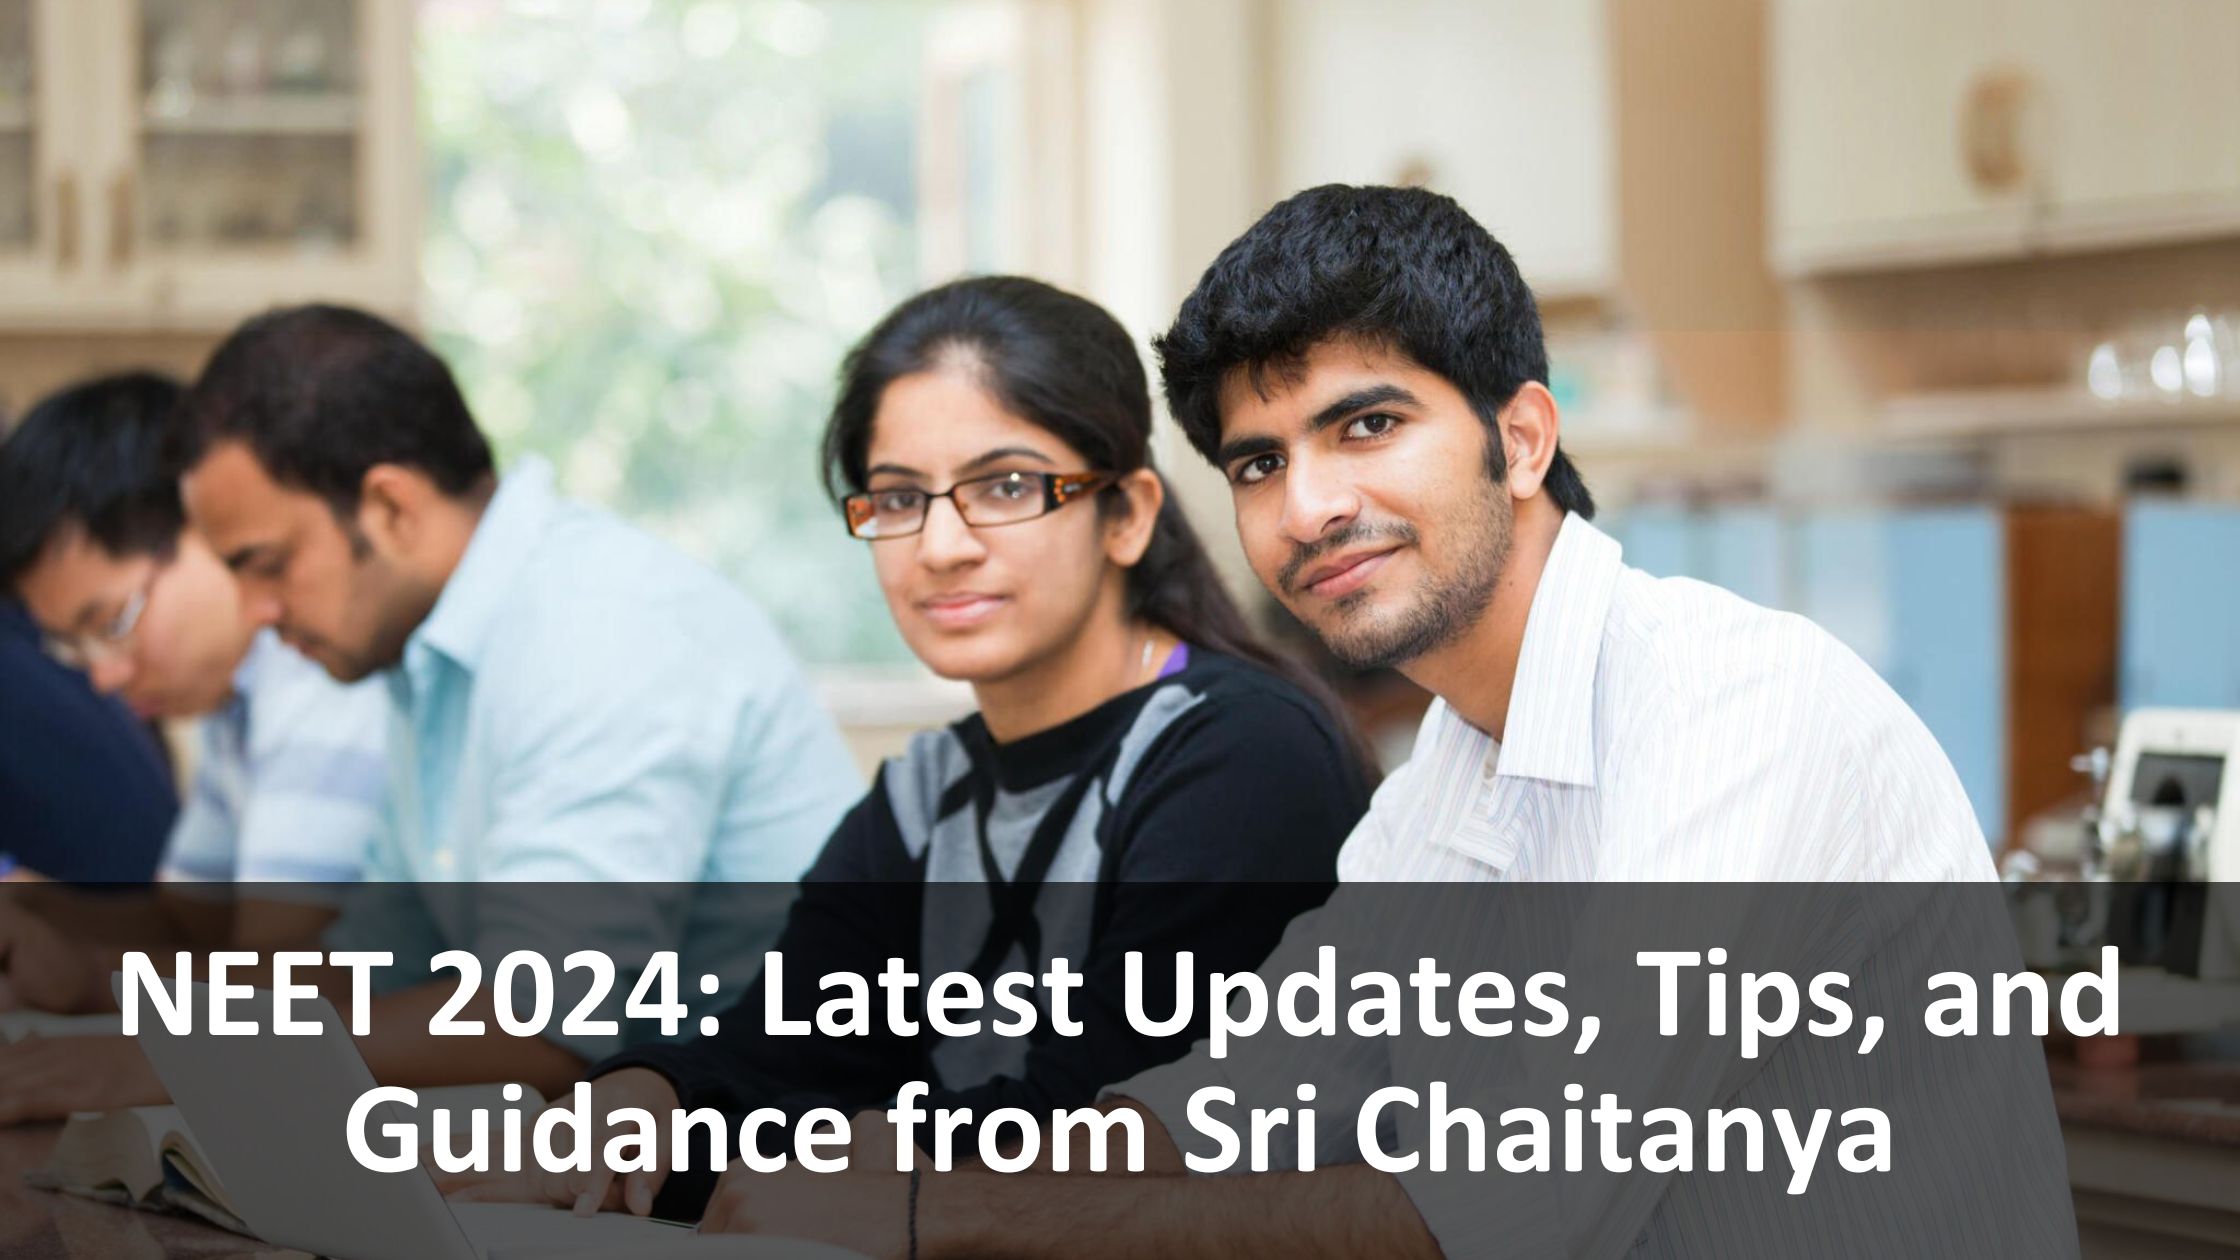 NEET 2024: Latest Updates, Tips, and Guidance from Sri Chaitanya